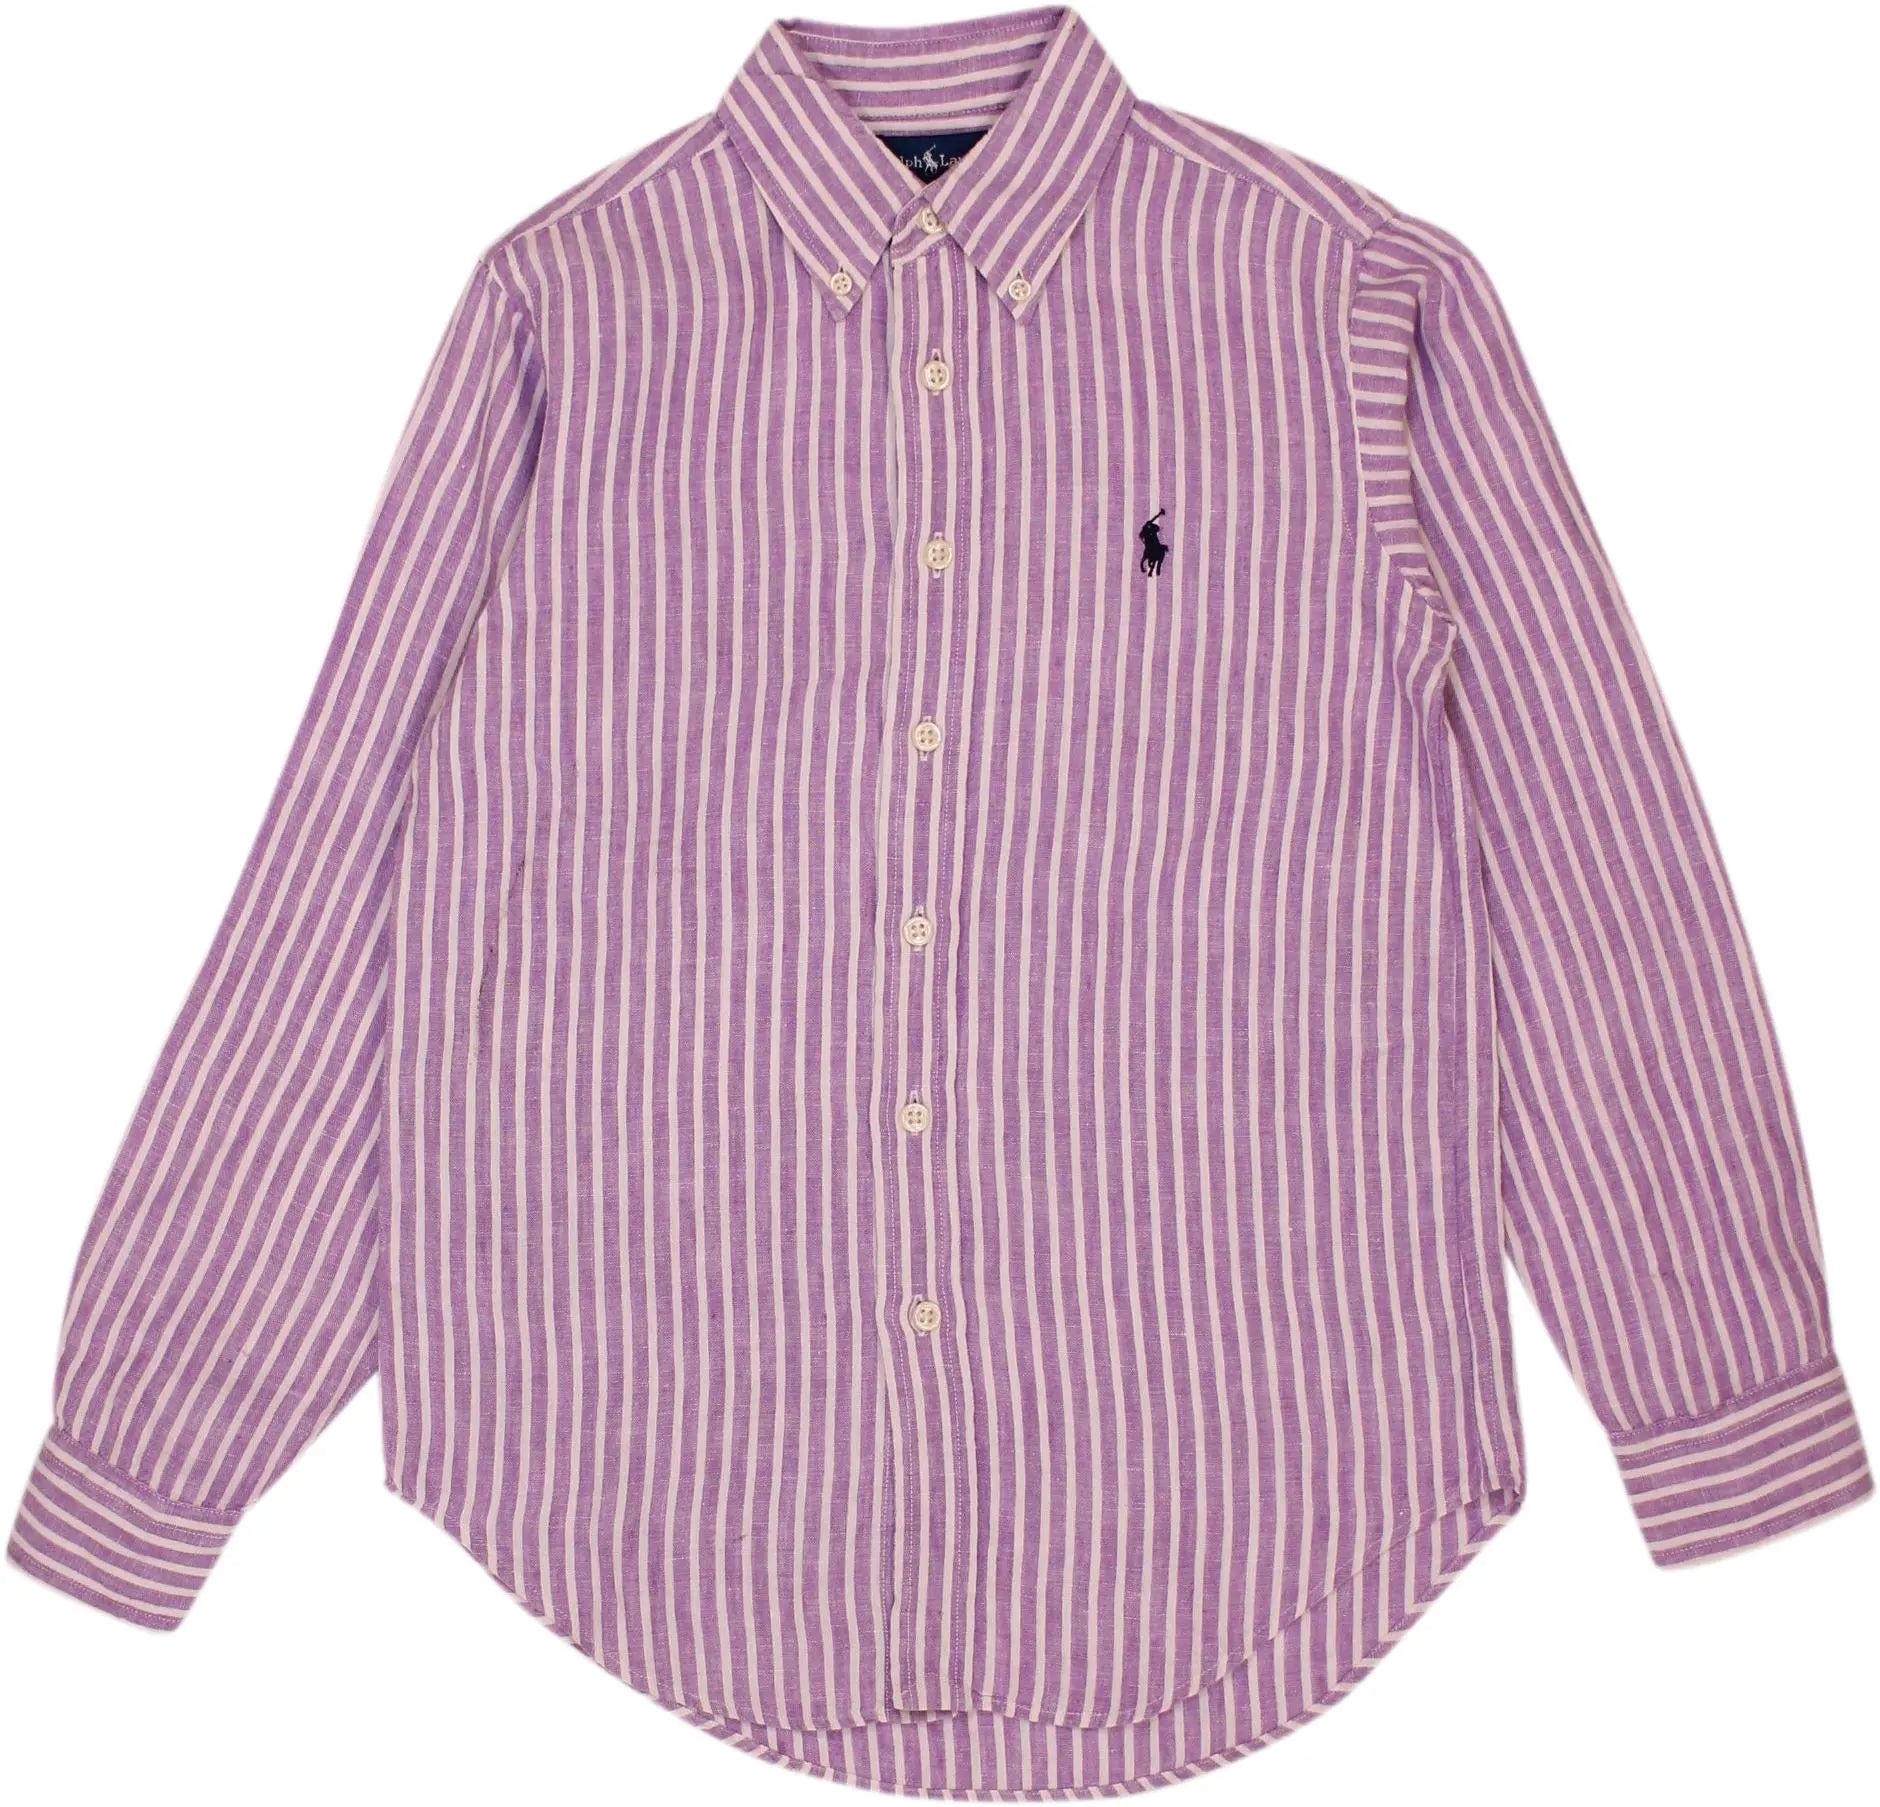 Ralph Lauren - Purple Striped Shirt by Ralph Lauren- ThriftTale.com - Vintage and second handclothing